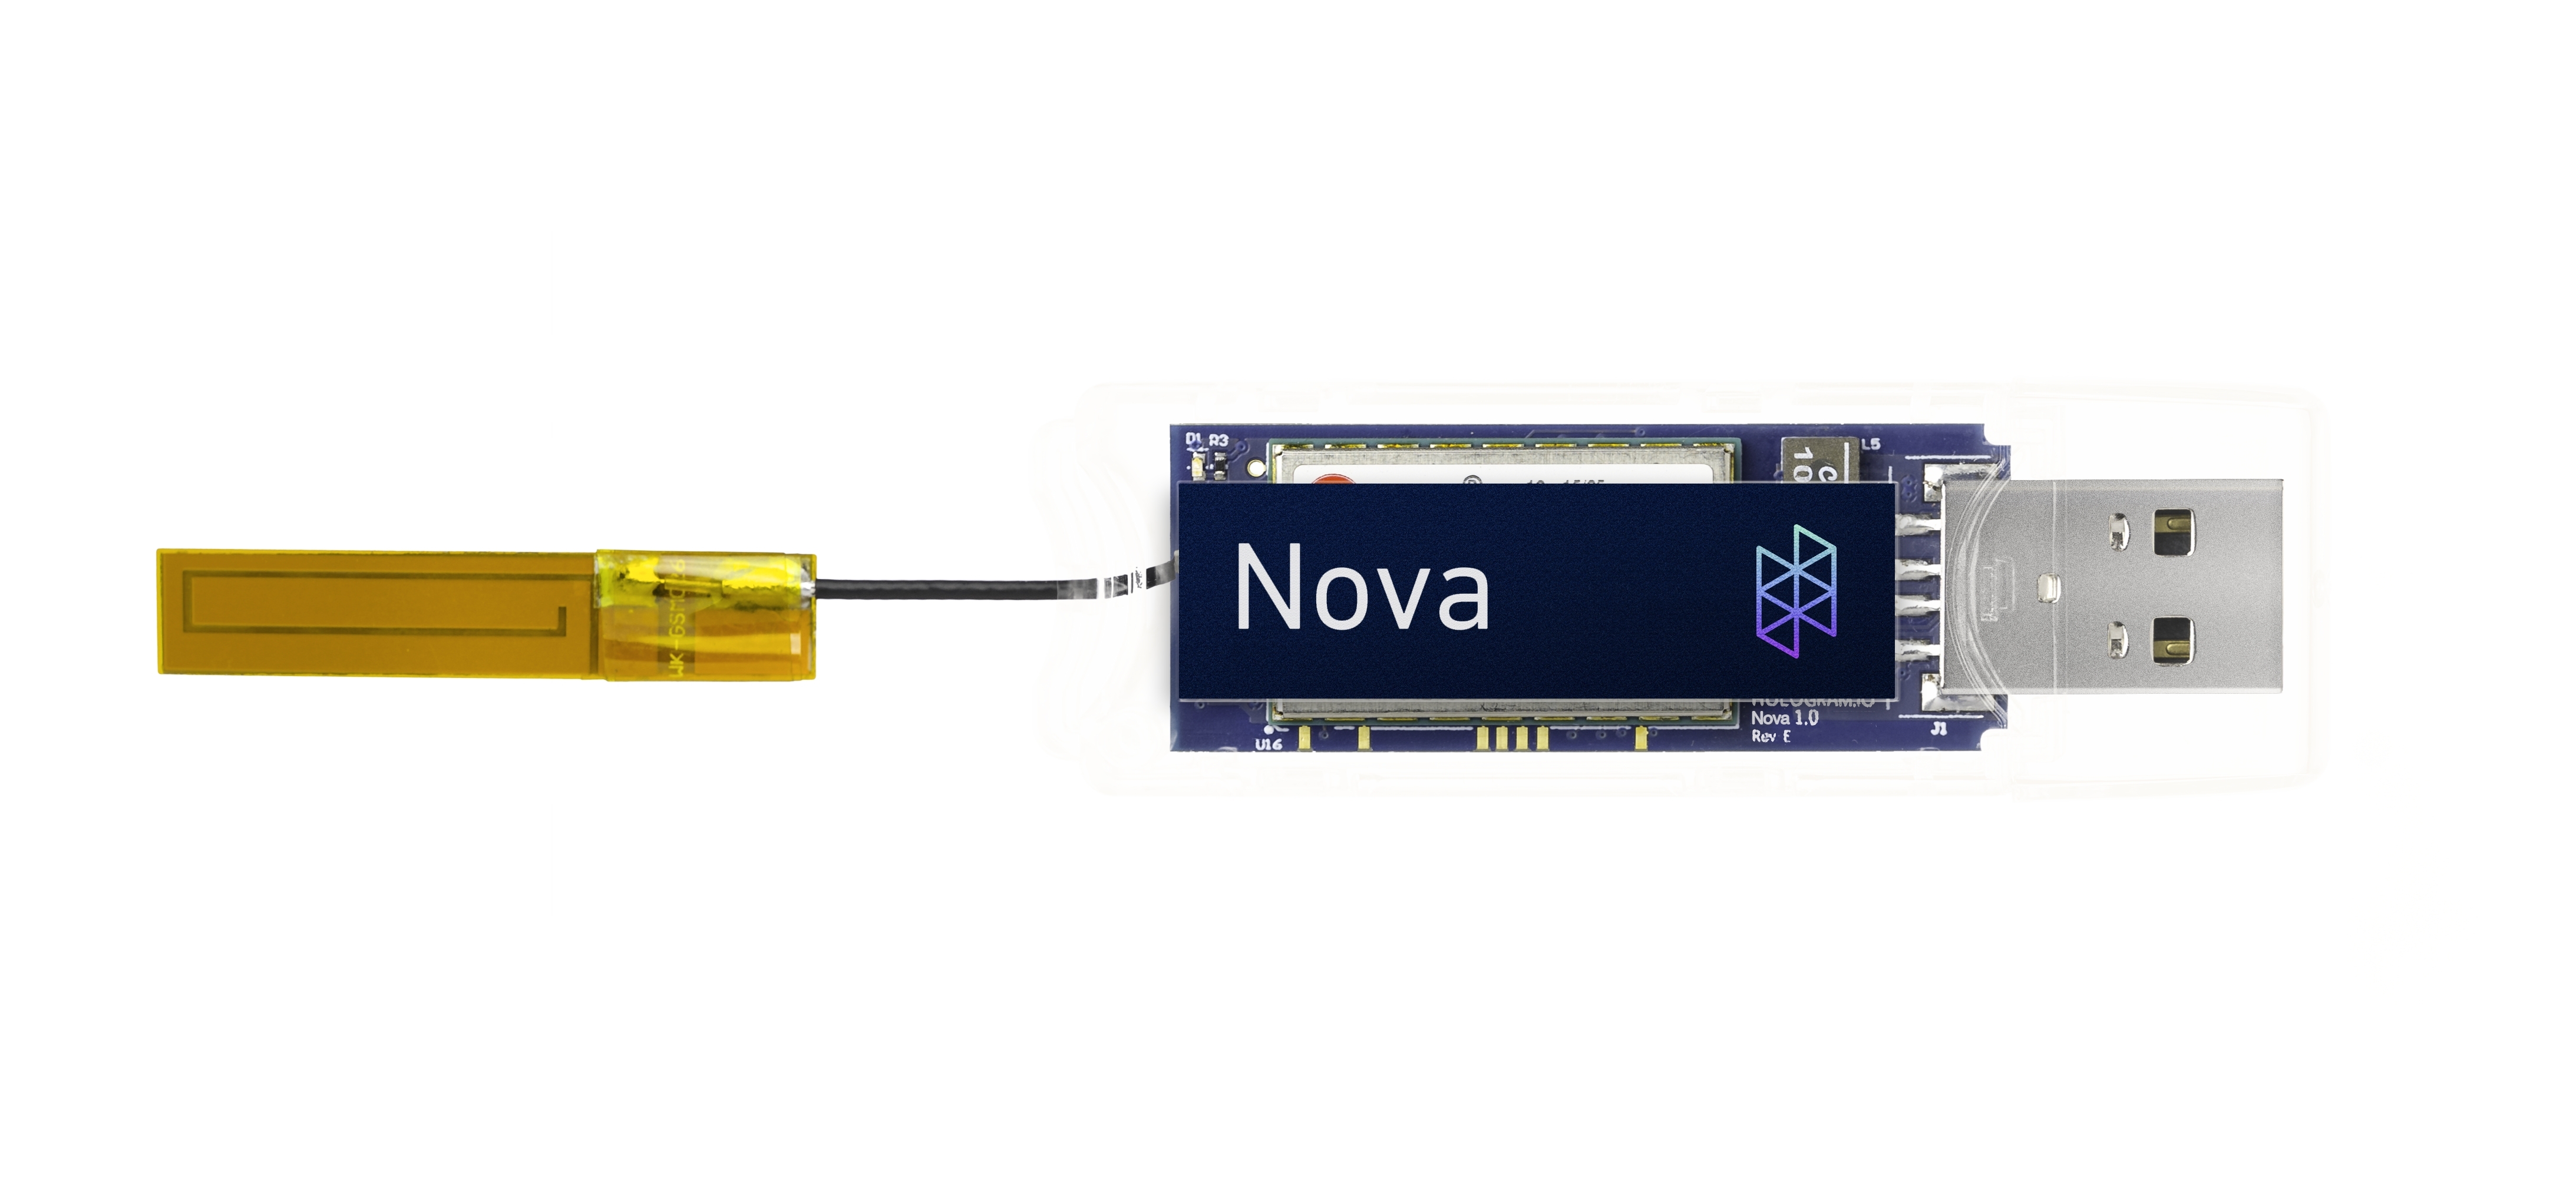 Hologram Releases Nova, an Open Source Cellular Modem for Cellular | Business Wire